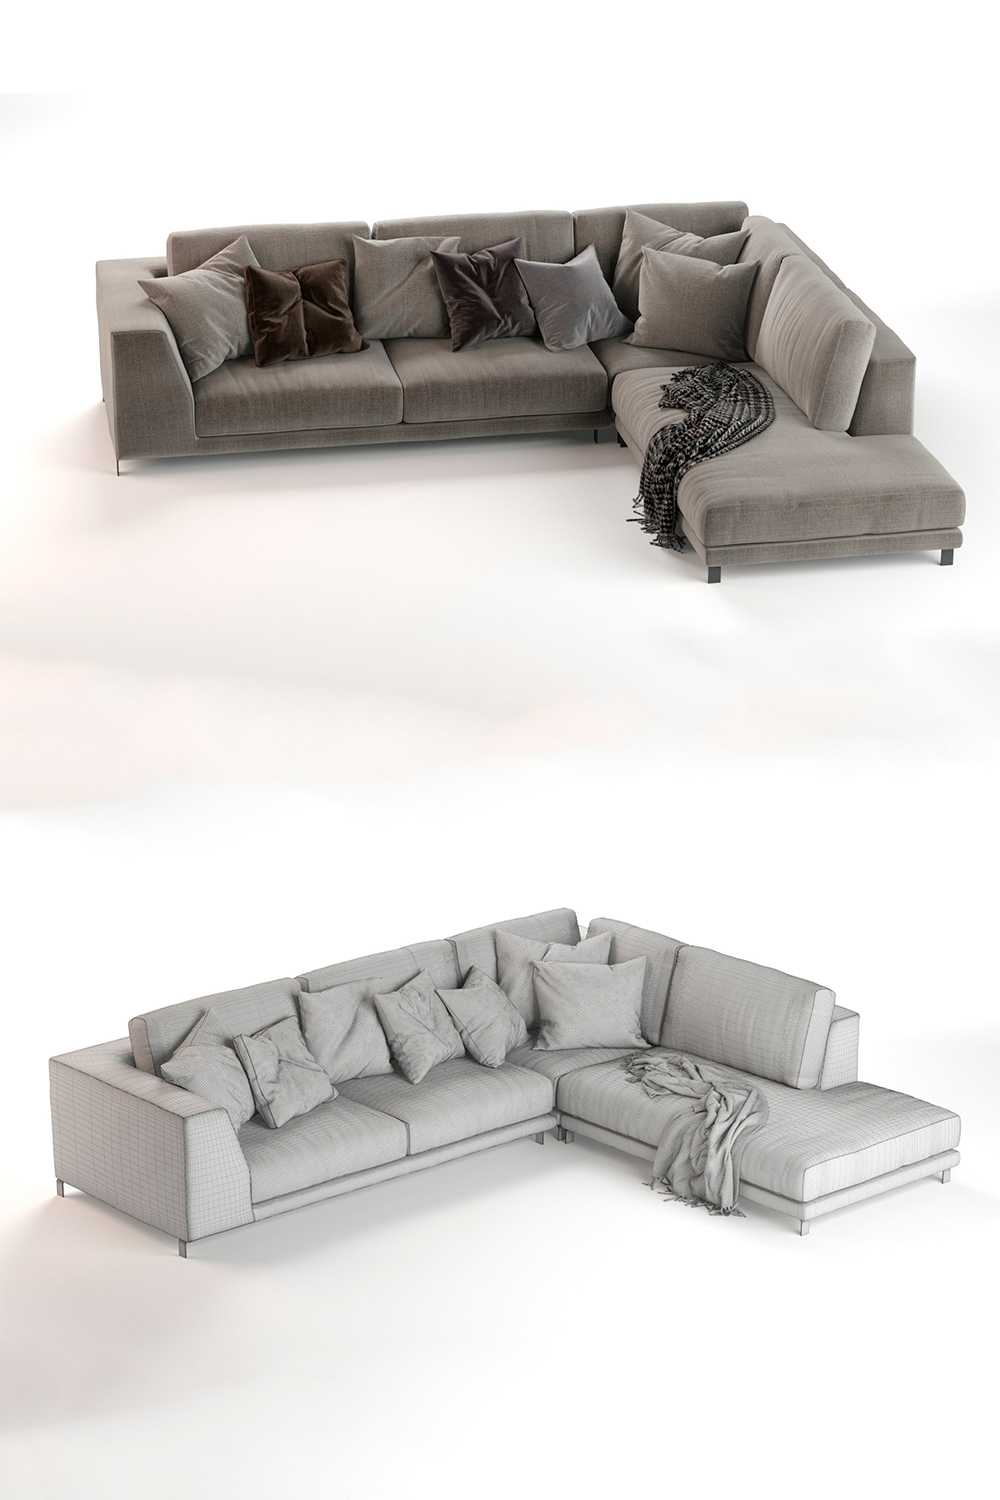 Rendering of an elegant 3d model of a corner sofa